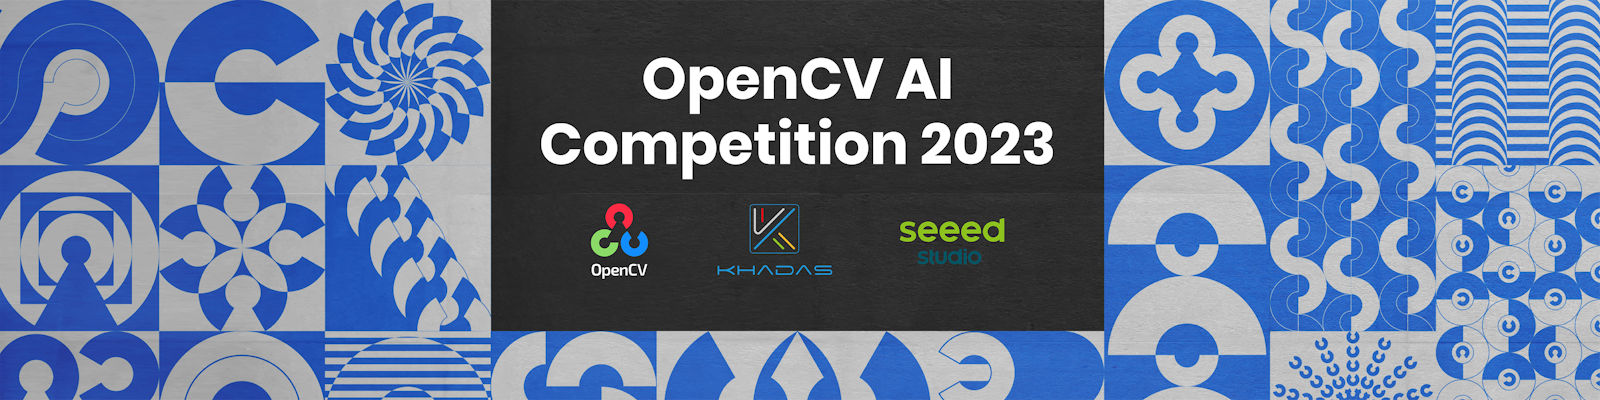 OpenCV AI Competition 2023